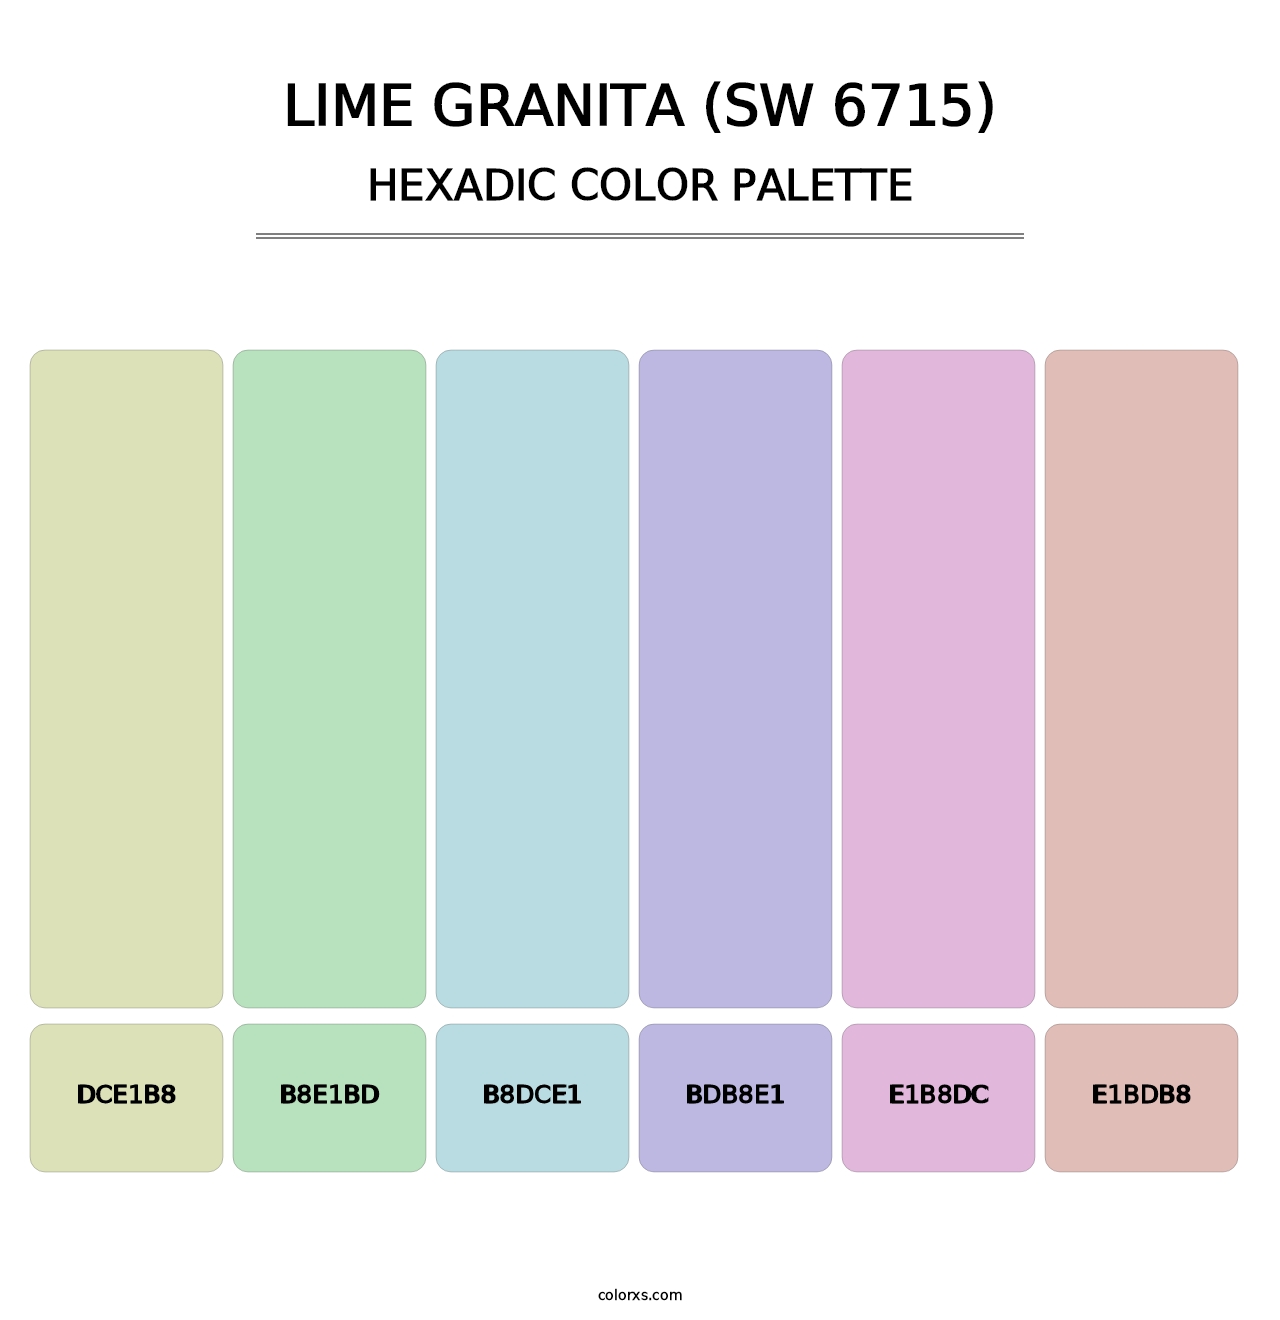 Lime Granita (SW 6715) - Hexadic Color Palette